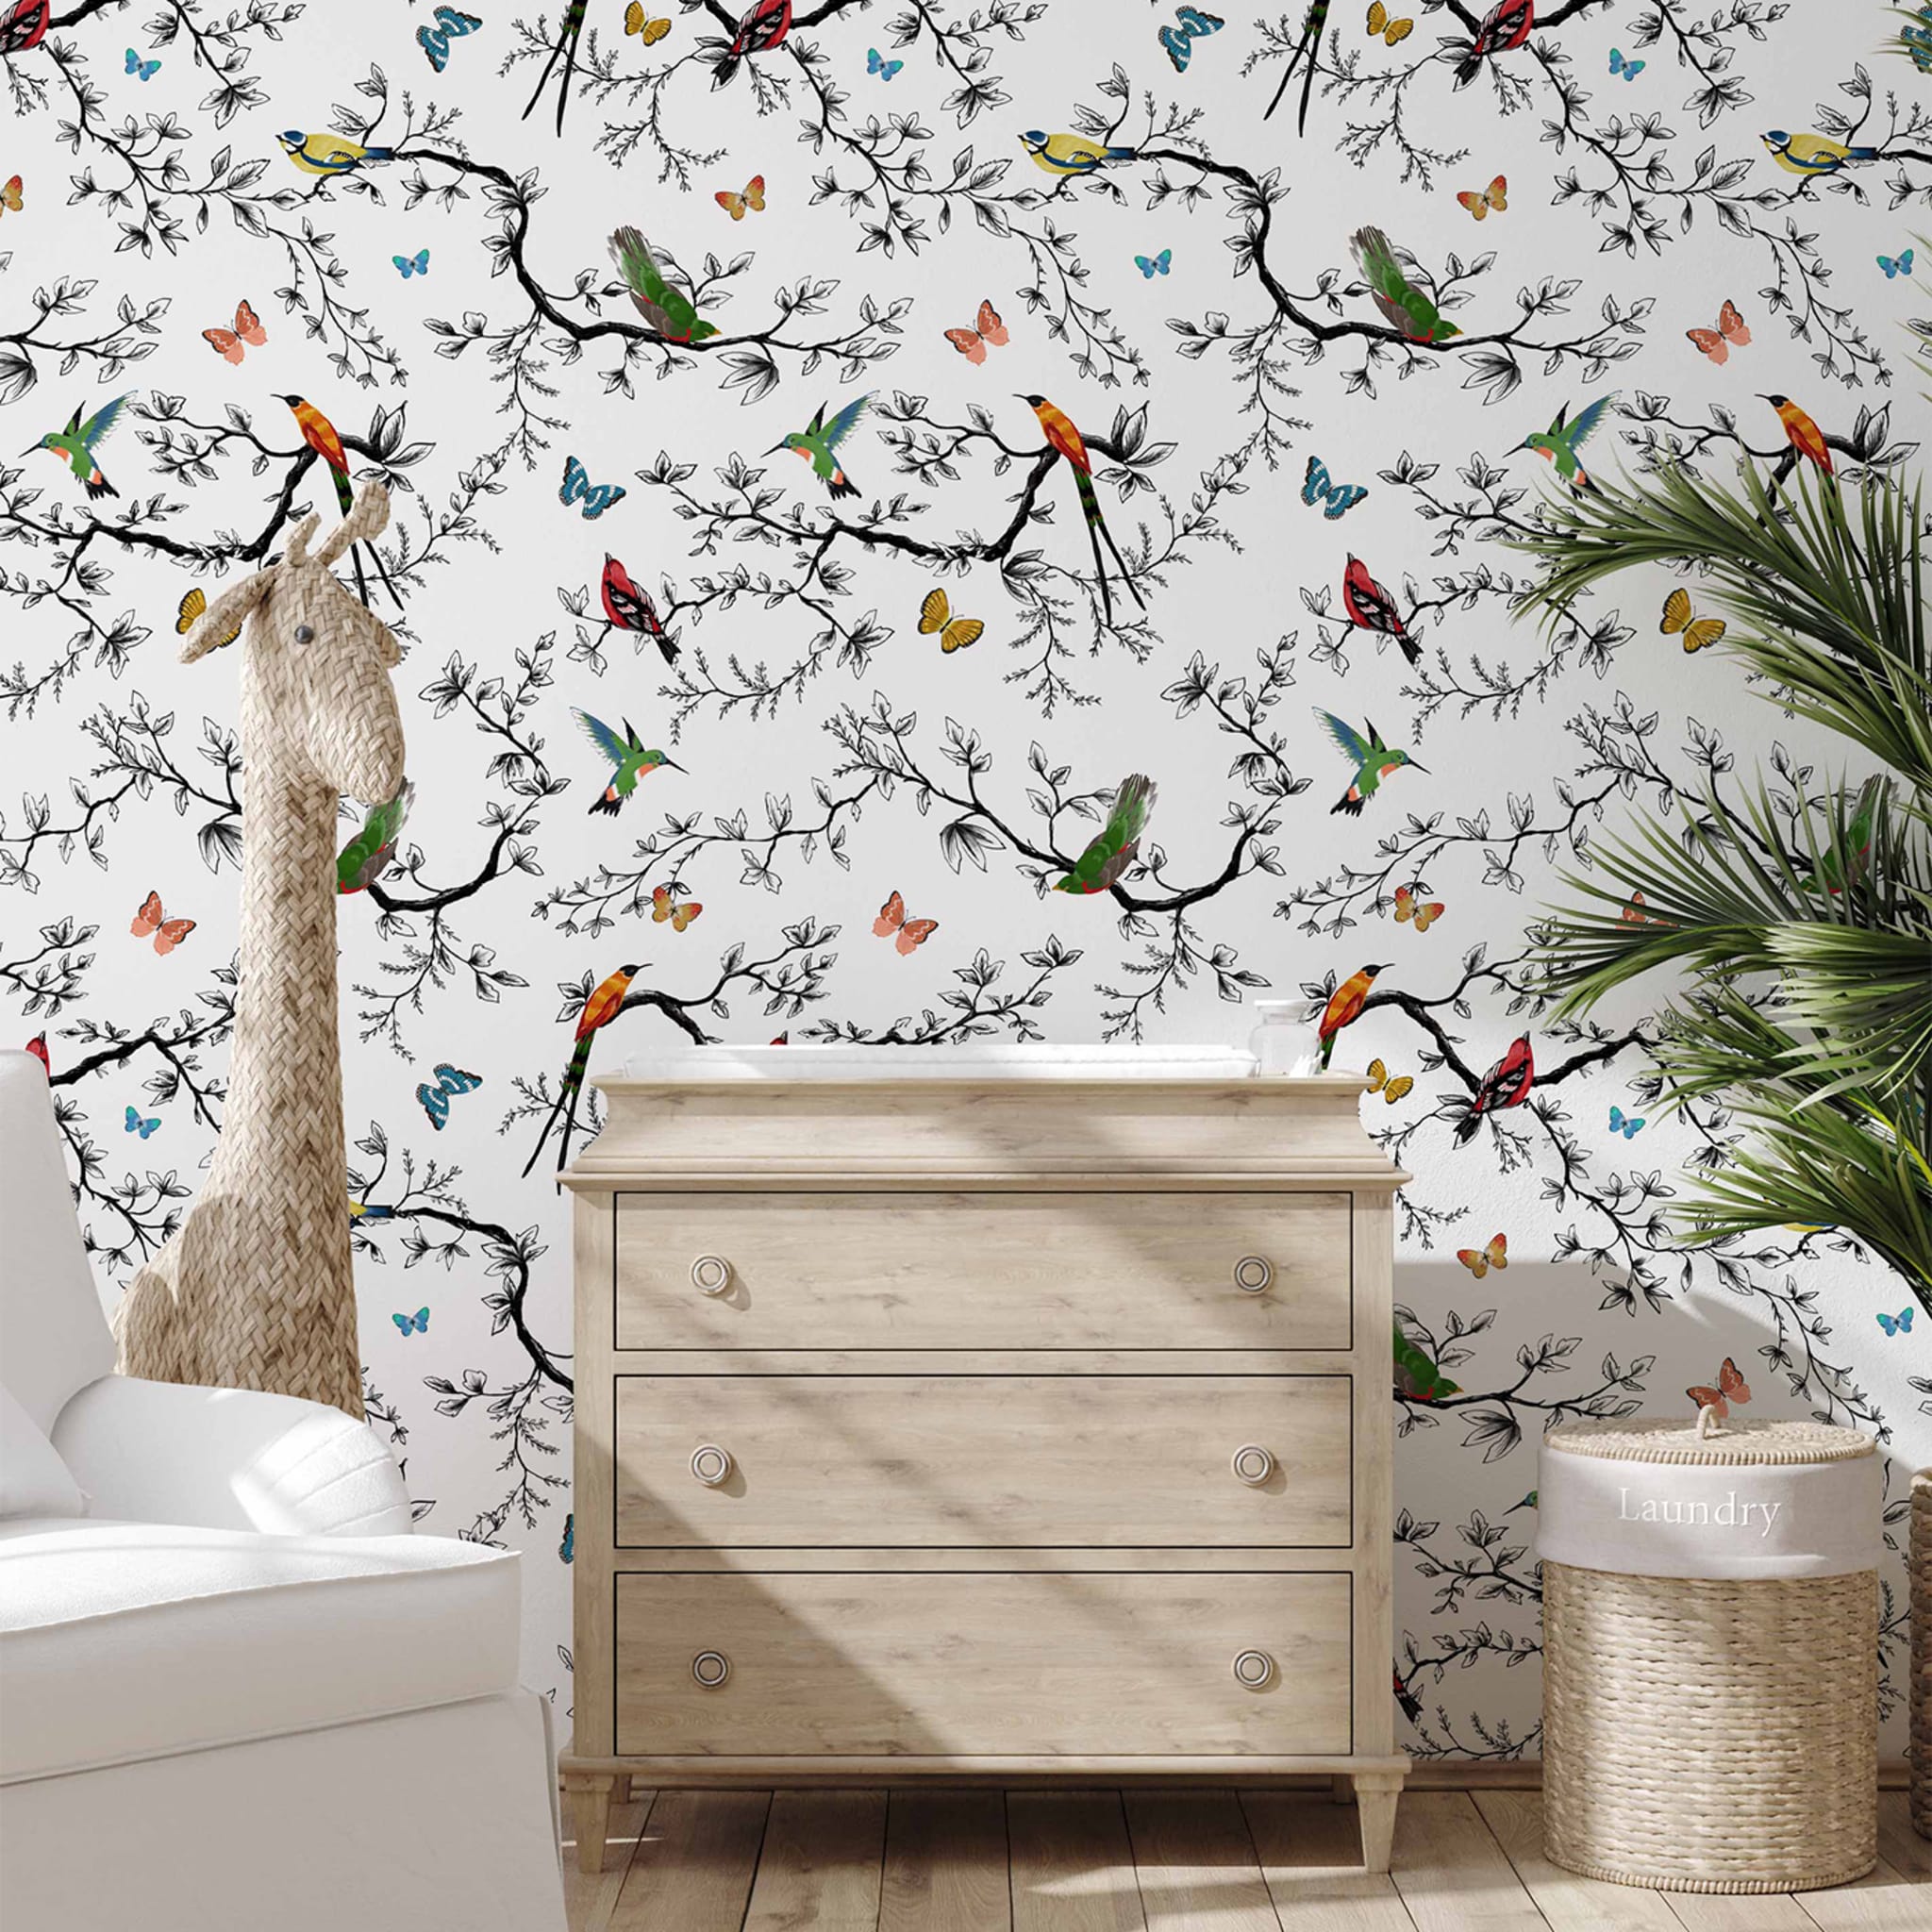 Whimsical Birds and Butterflies Wallpaper - Alternative view 1